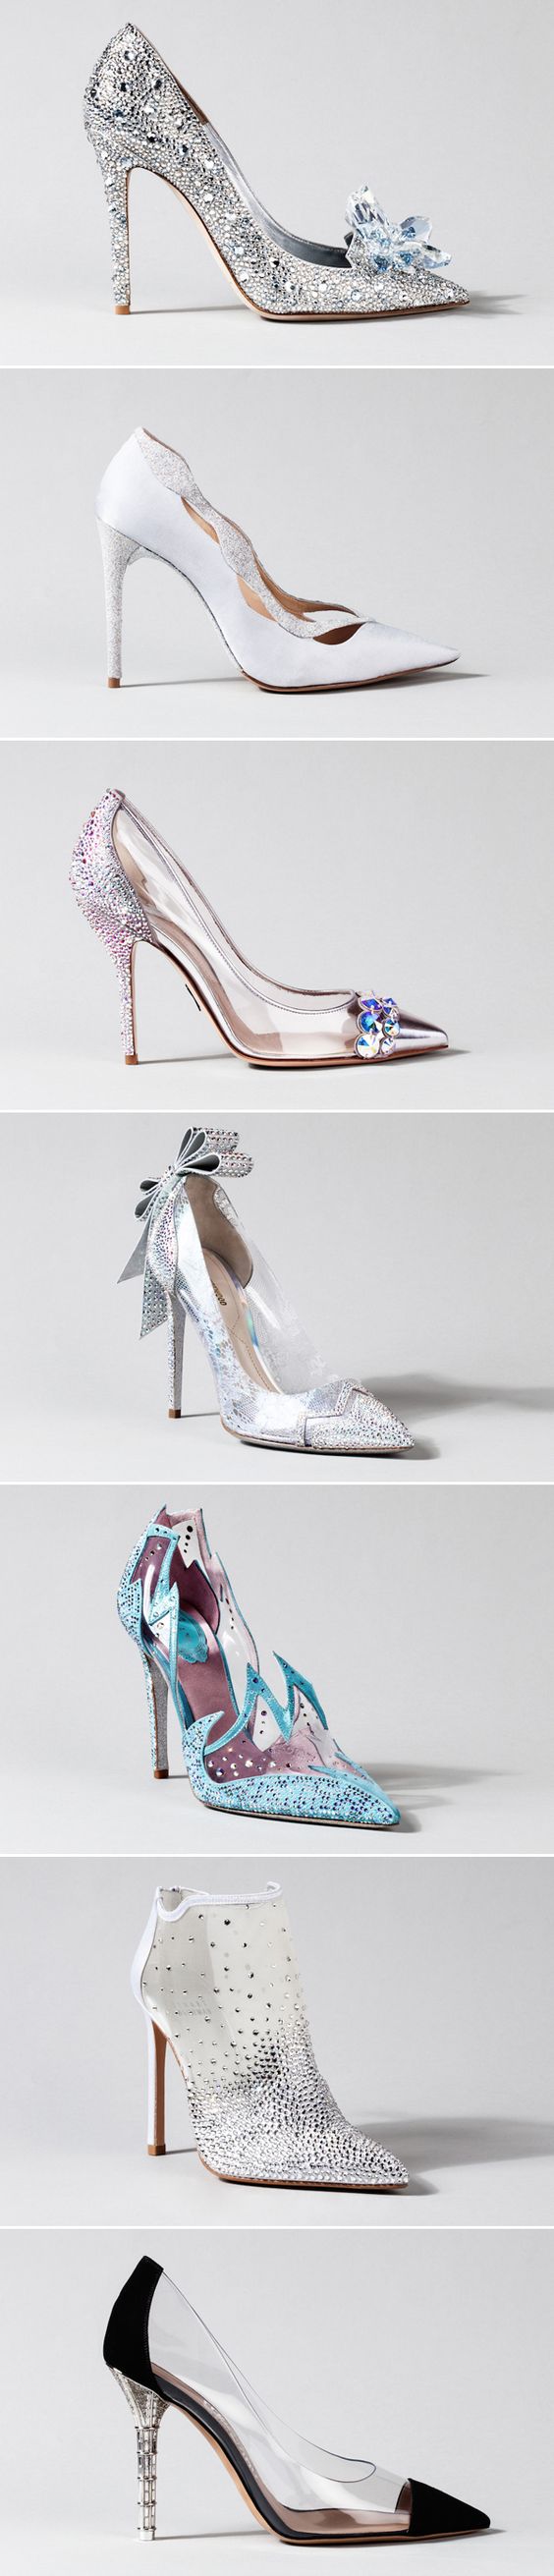 Cinderella Inspired Wedding Shoes